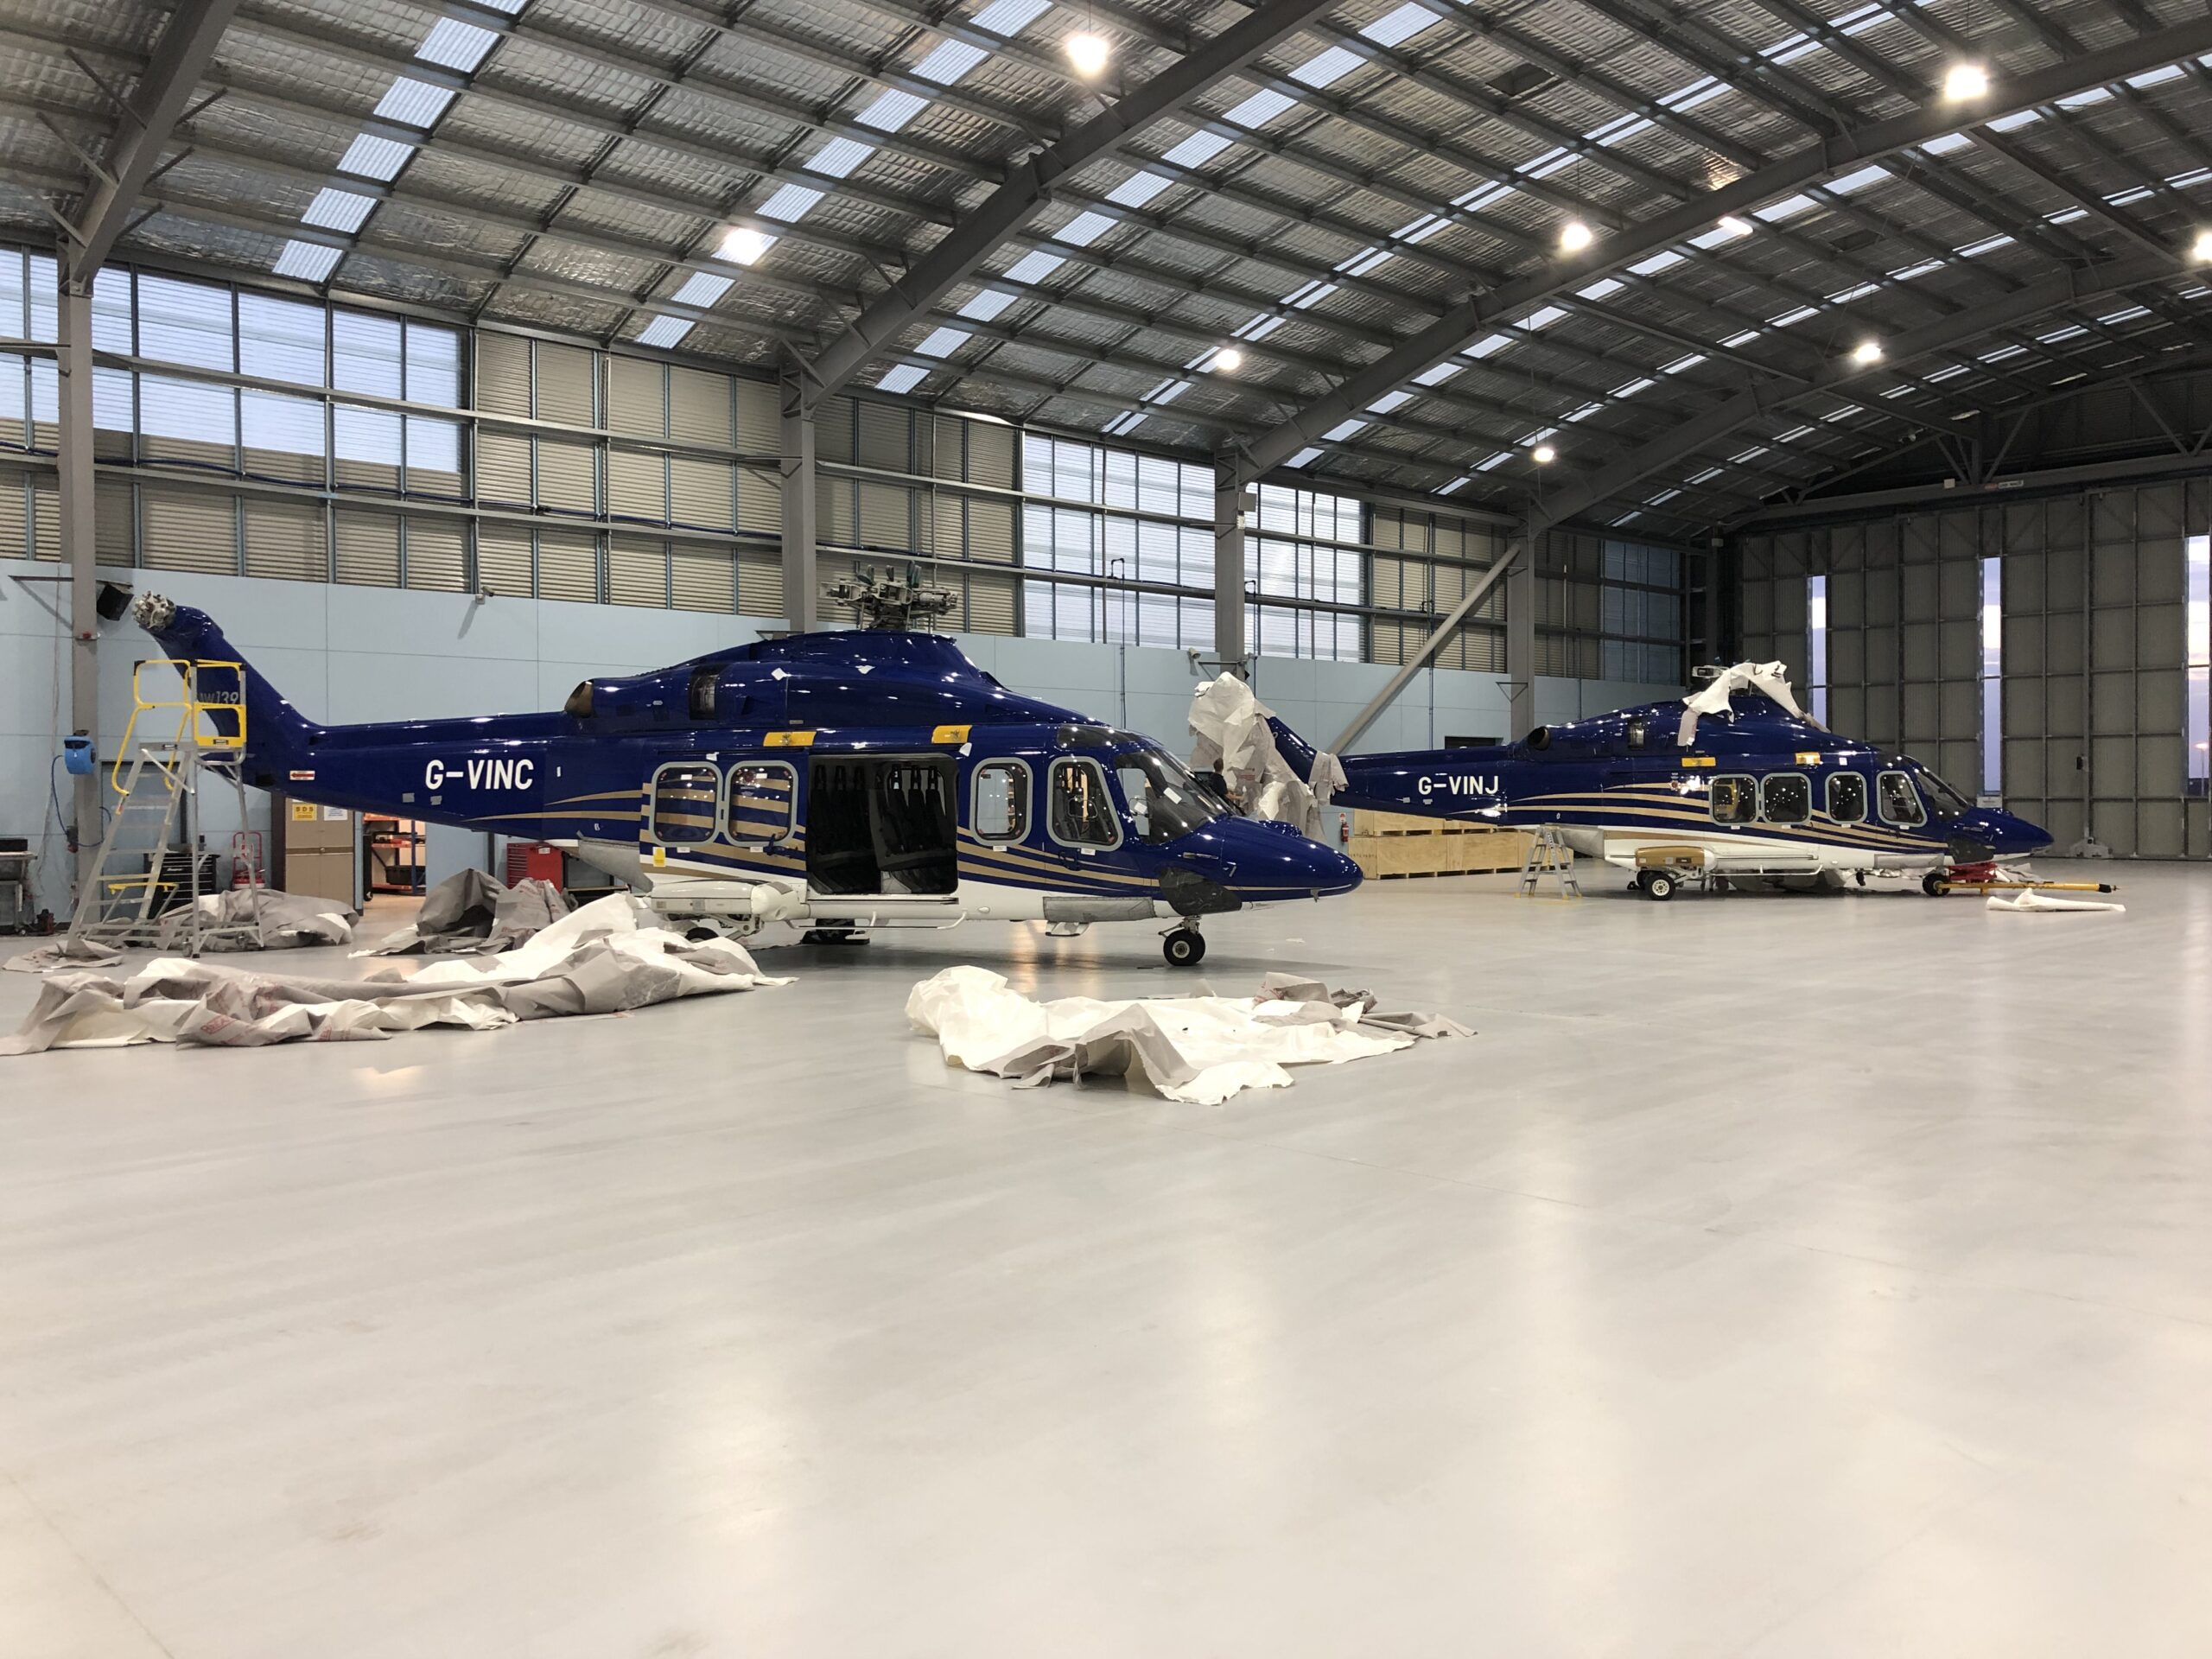 LCI GROWS AUSTRALIA-BASED HELICOPTER FLEET